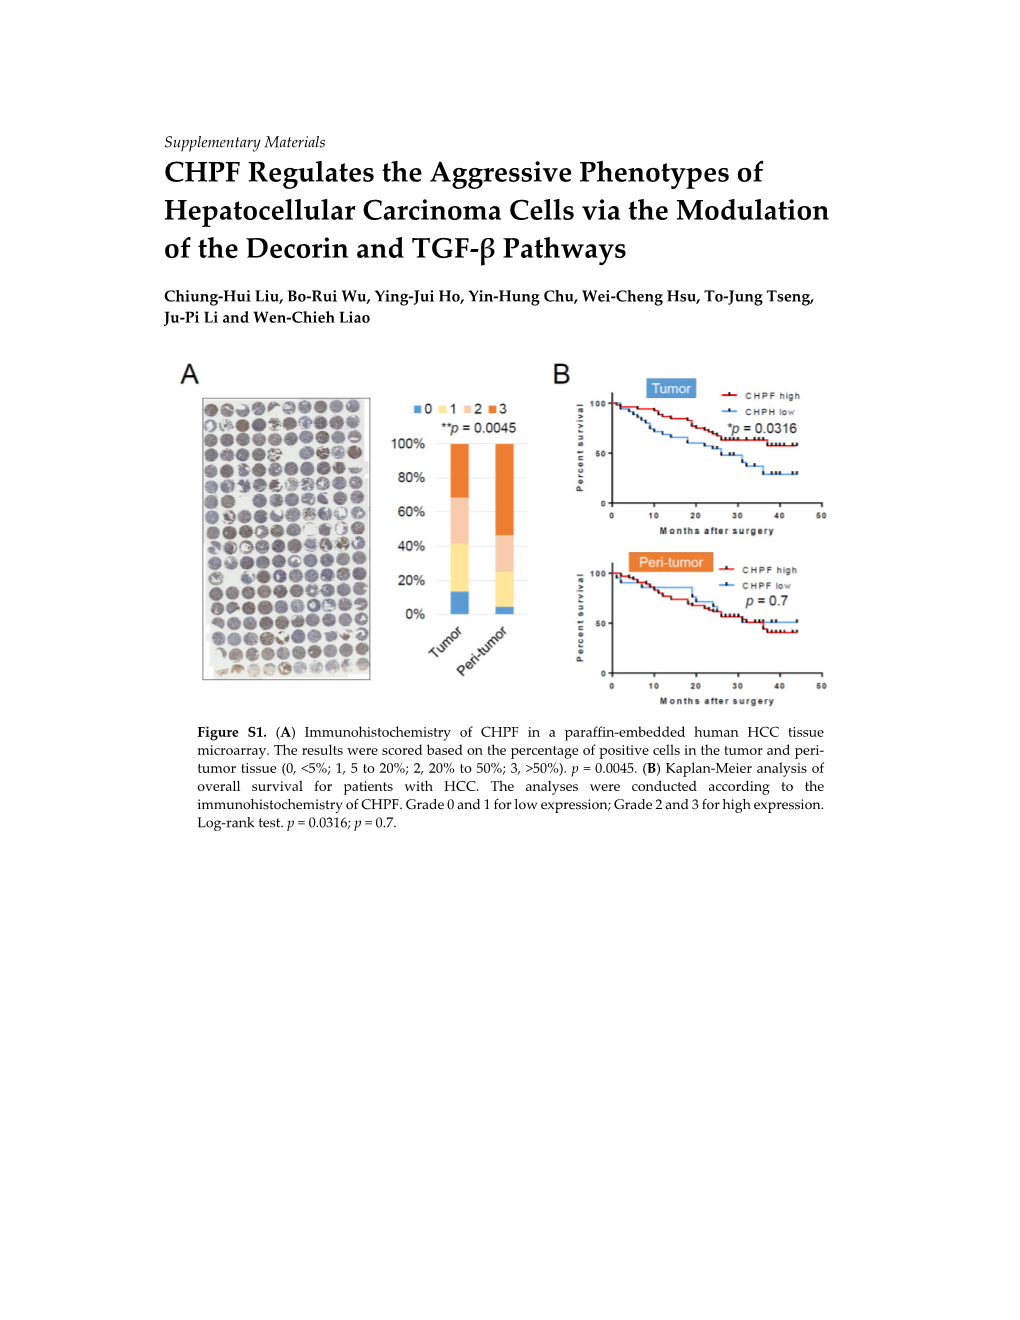 CHPF Regulates the Aggressive Phenotypes of Hepatocellular Carcinoma Cells Via the Modulation of the Decorin and TGF‐Β Pathways